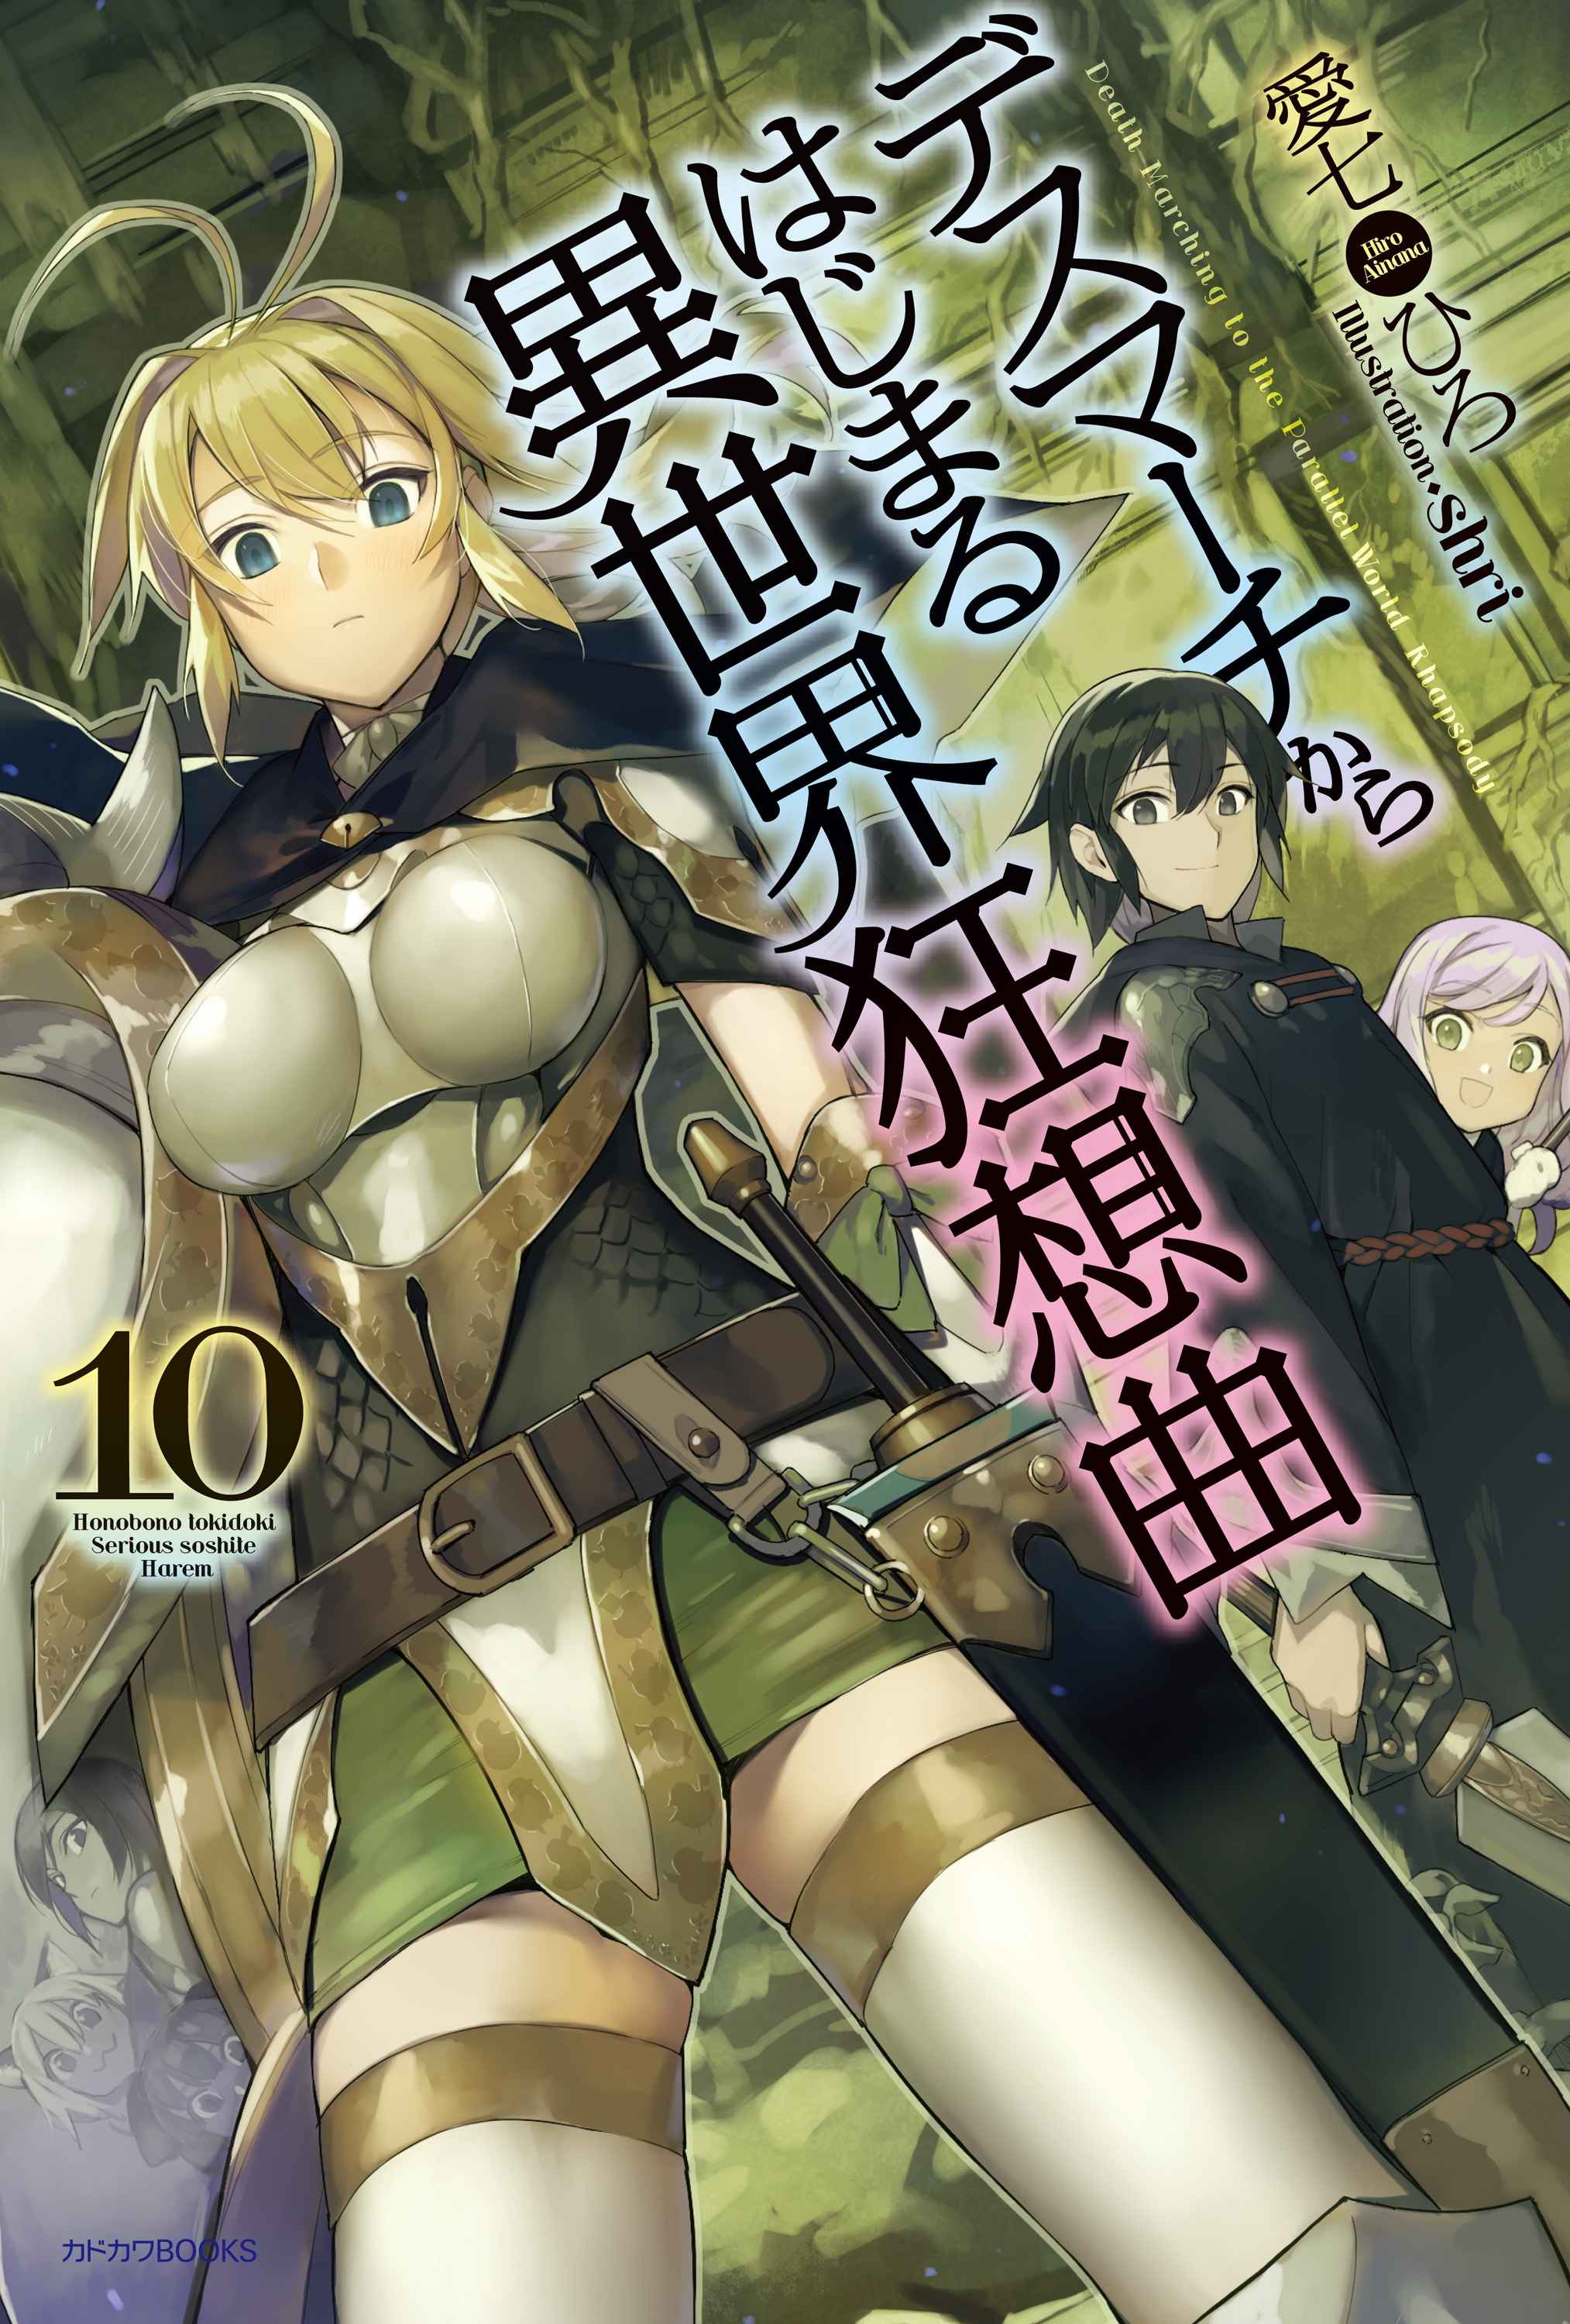 Death March to the Parallel World Rhapsody (light novel) Volume 16 - Manga  Store 